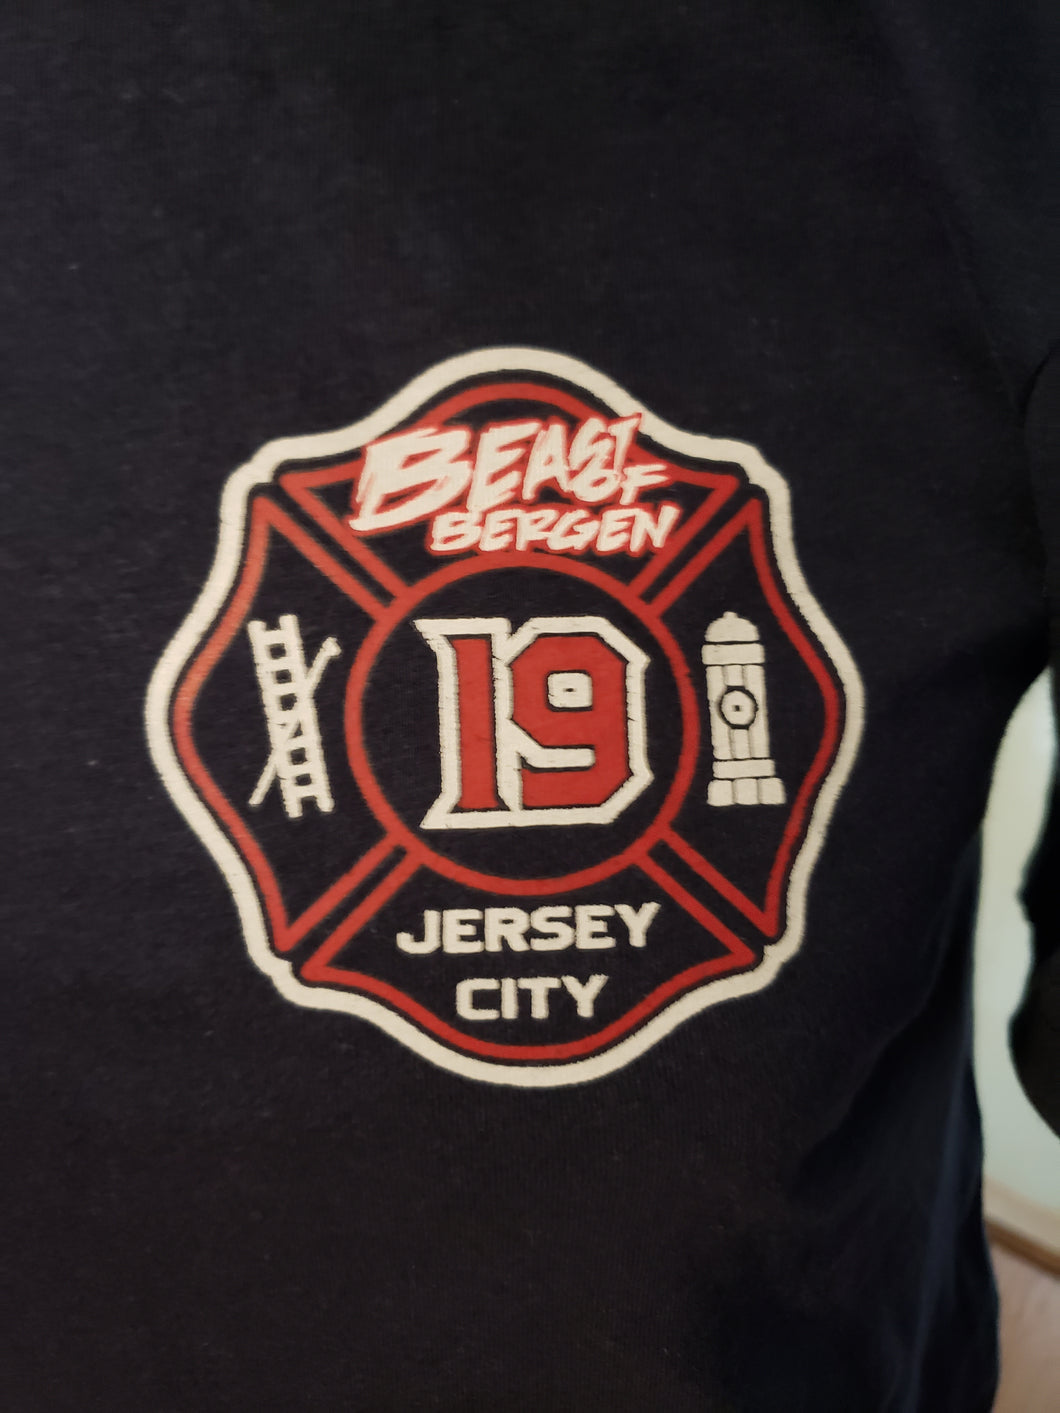 FDJC BRAVESTWEAR Fire Department ENGINE 19 Printed HOODED Sweatshirts (3 styles)